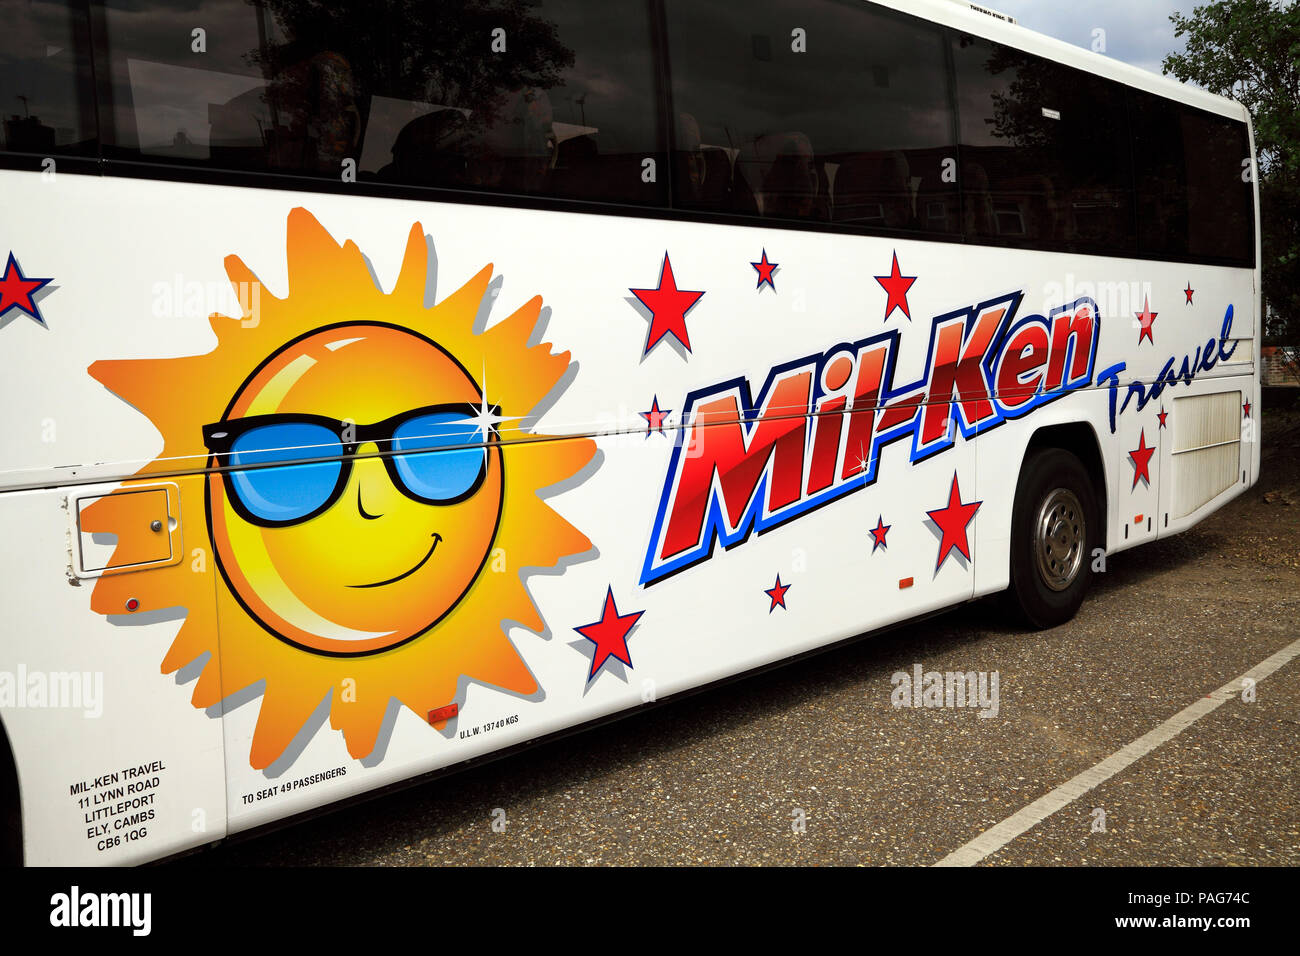 Mil-Ken, Travel coach, day trips, Littleport, Cambridgeshire, UK, holiday, coaches, travel Stock Photo